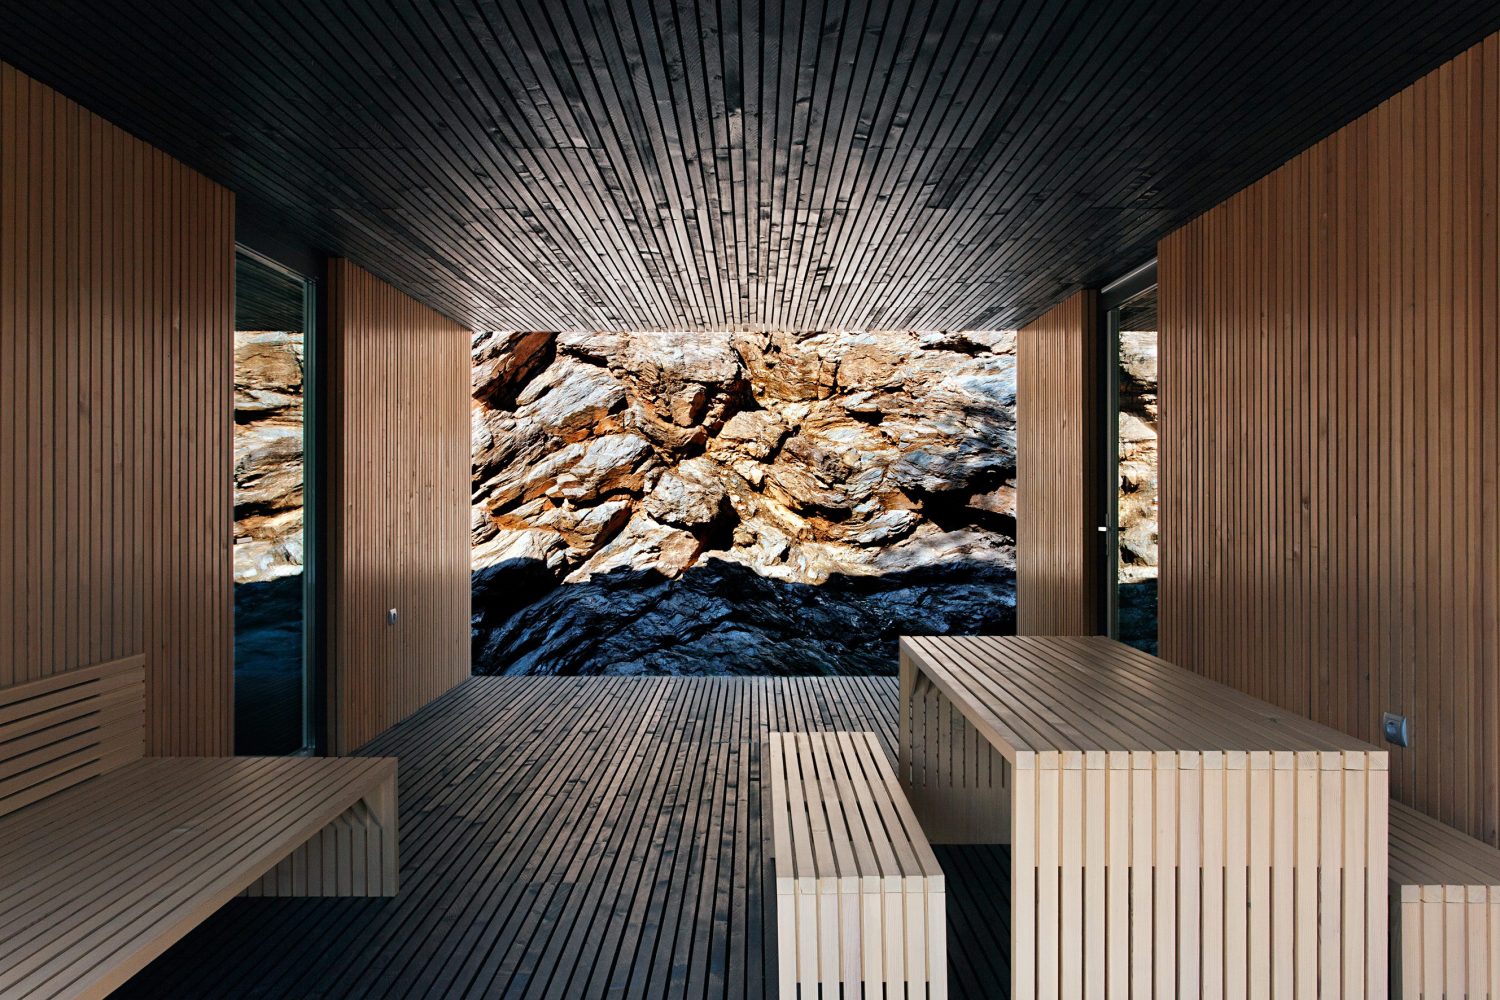 Hideg House by Béres Architects